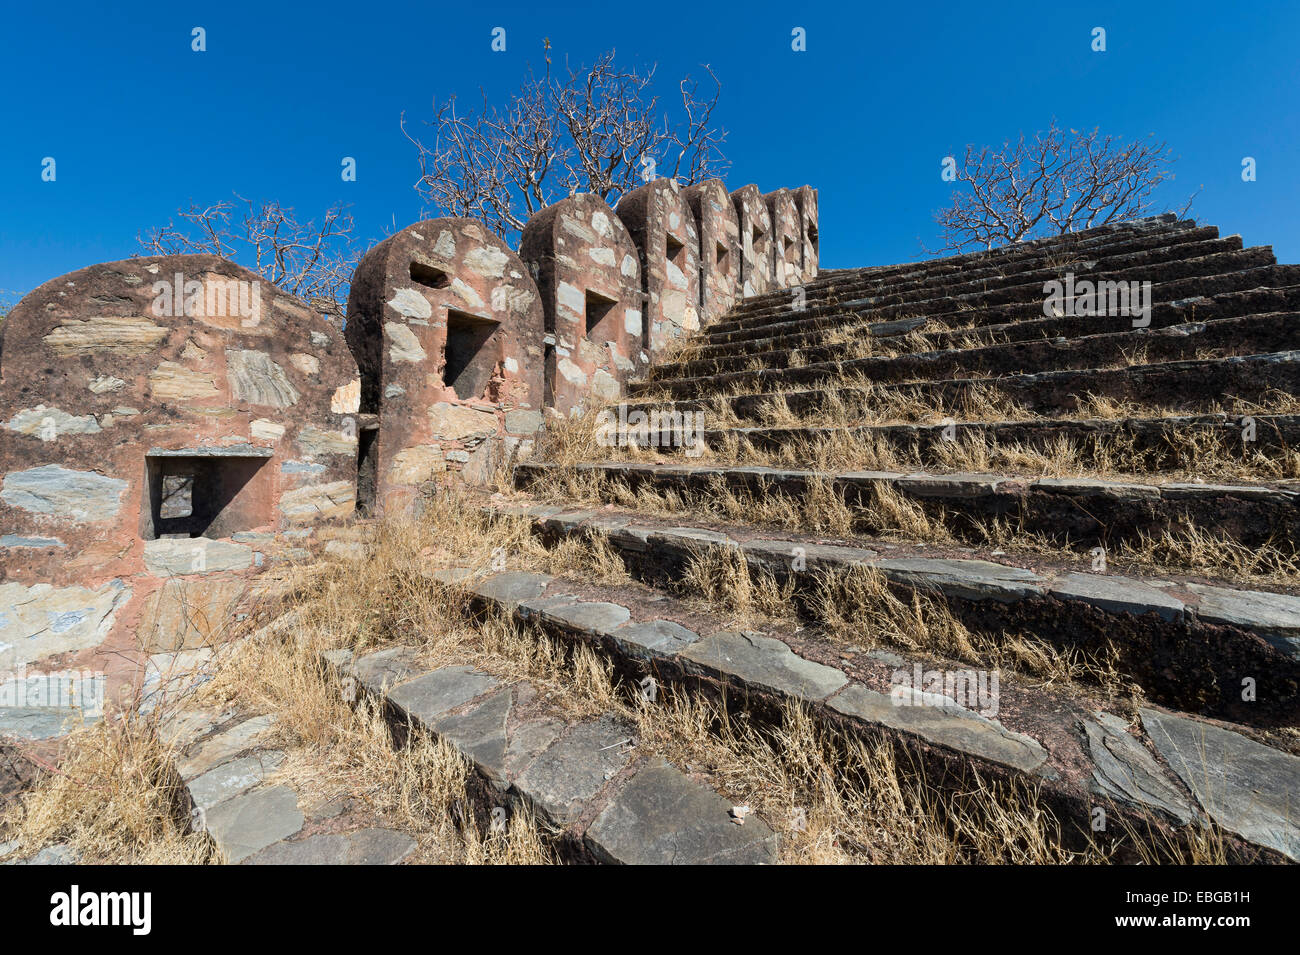 Remparts et escaliers d'une enceinte fortifiée, fort de Kumbhalgarh ou Kumbhalmer, Fort Kumbhalgarh, Rajasthan, Inde Banque D'Images